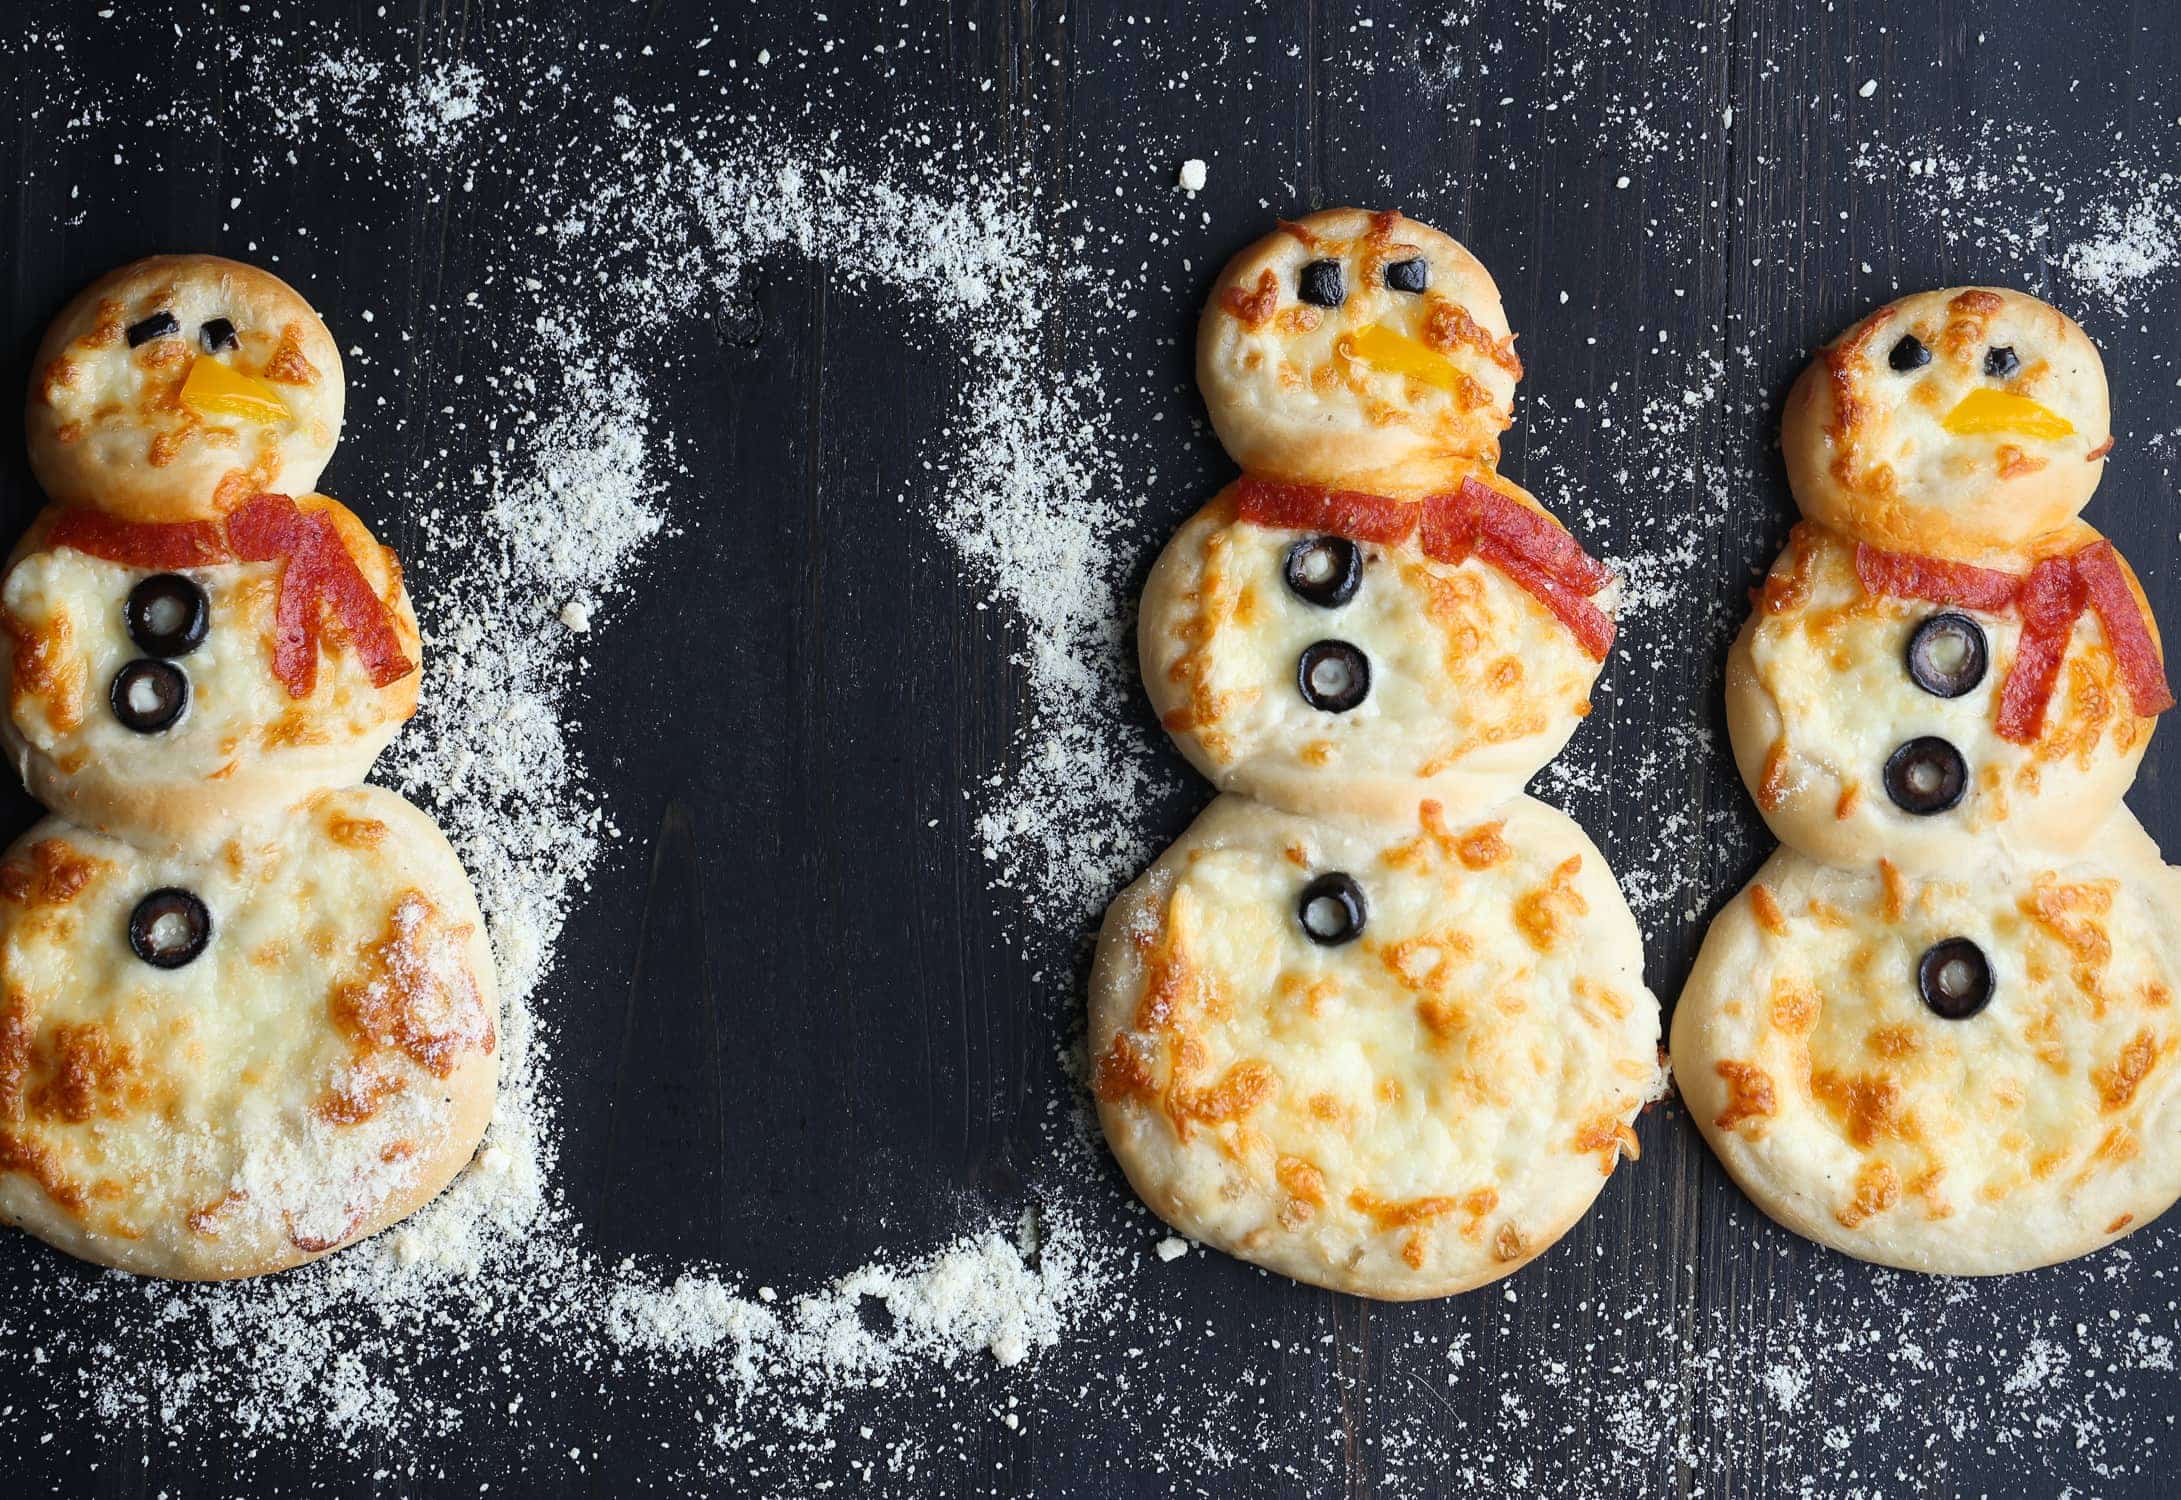 Snowman Personal Pizzas